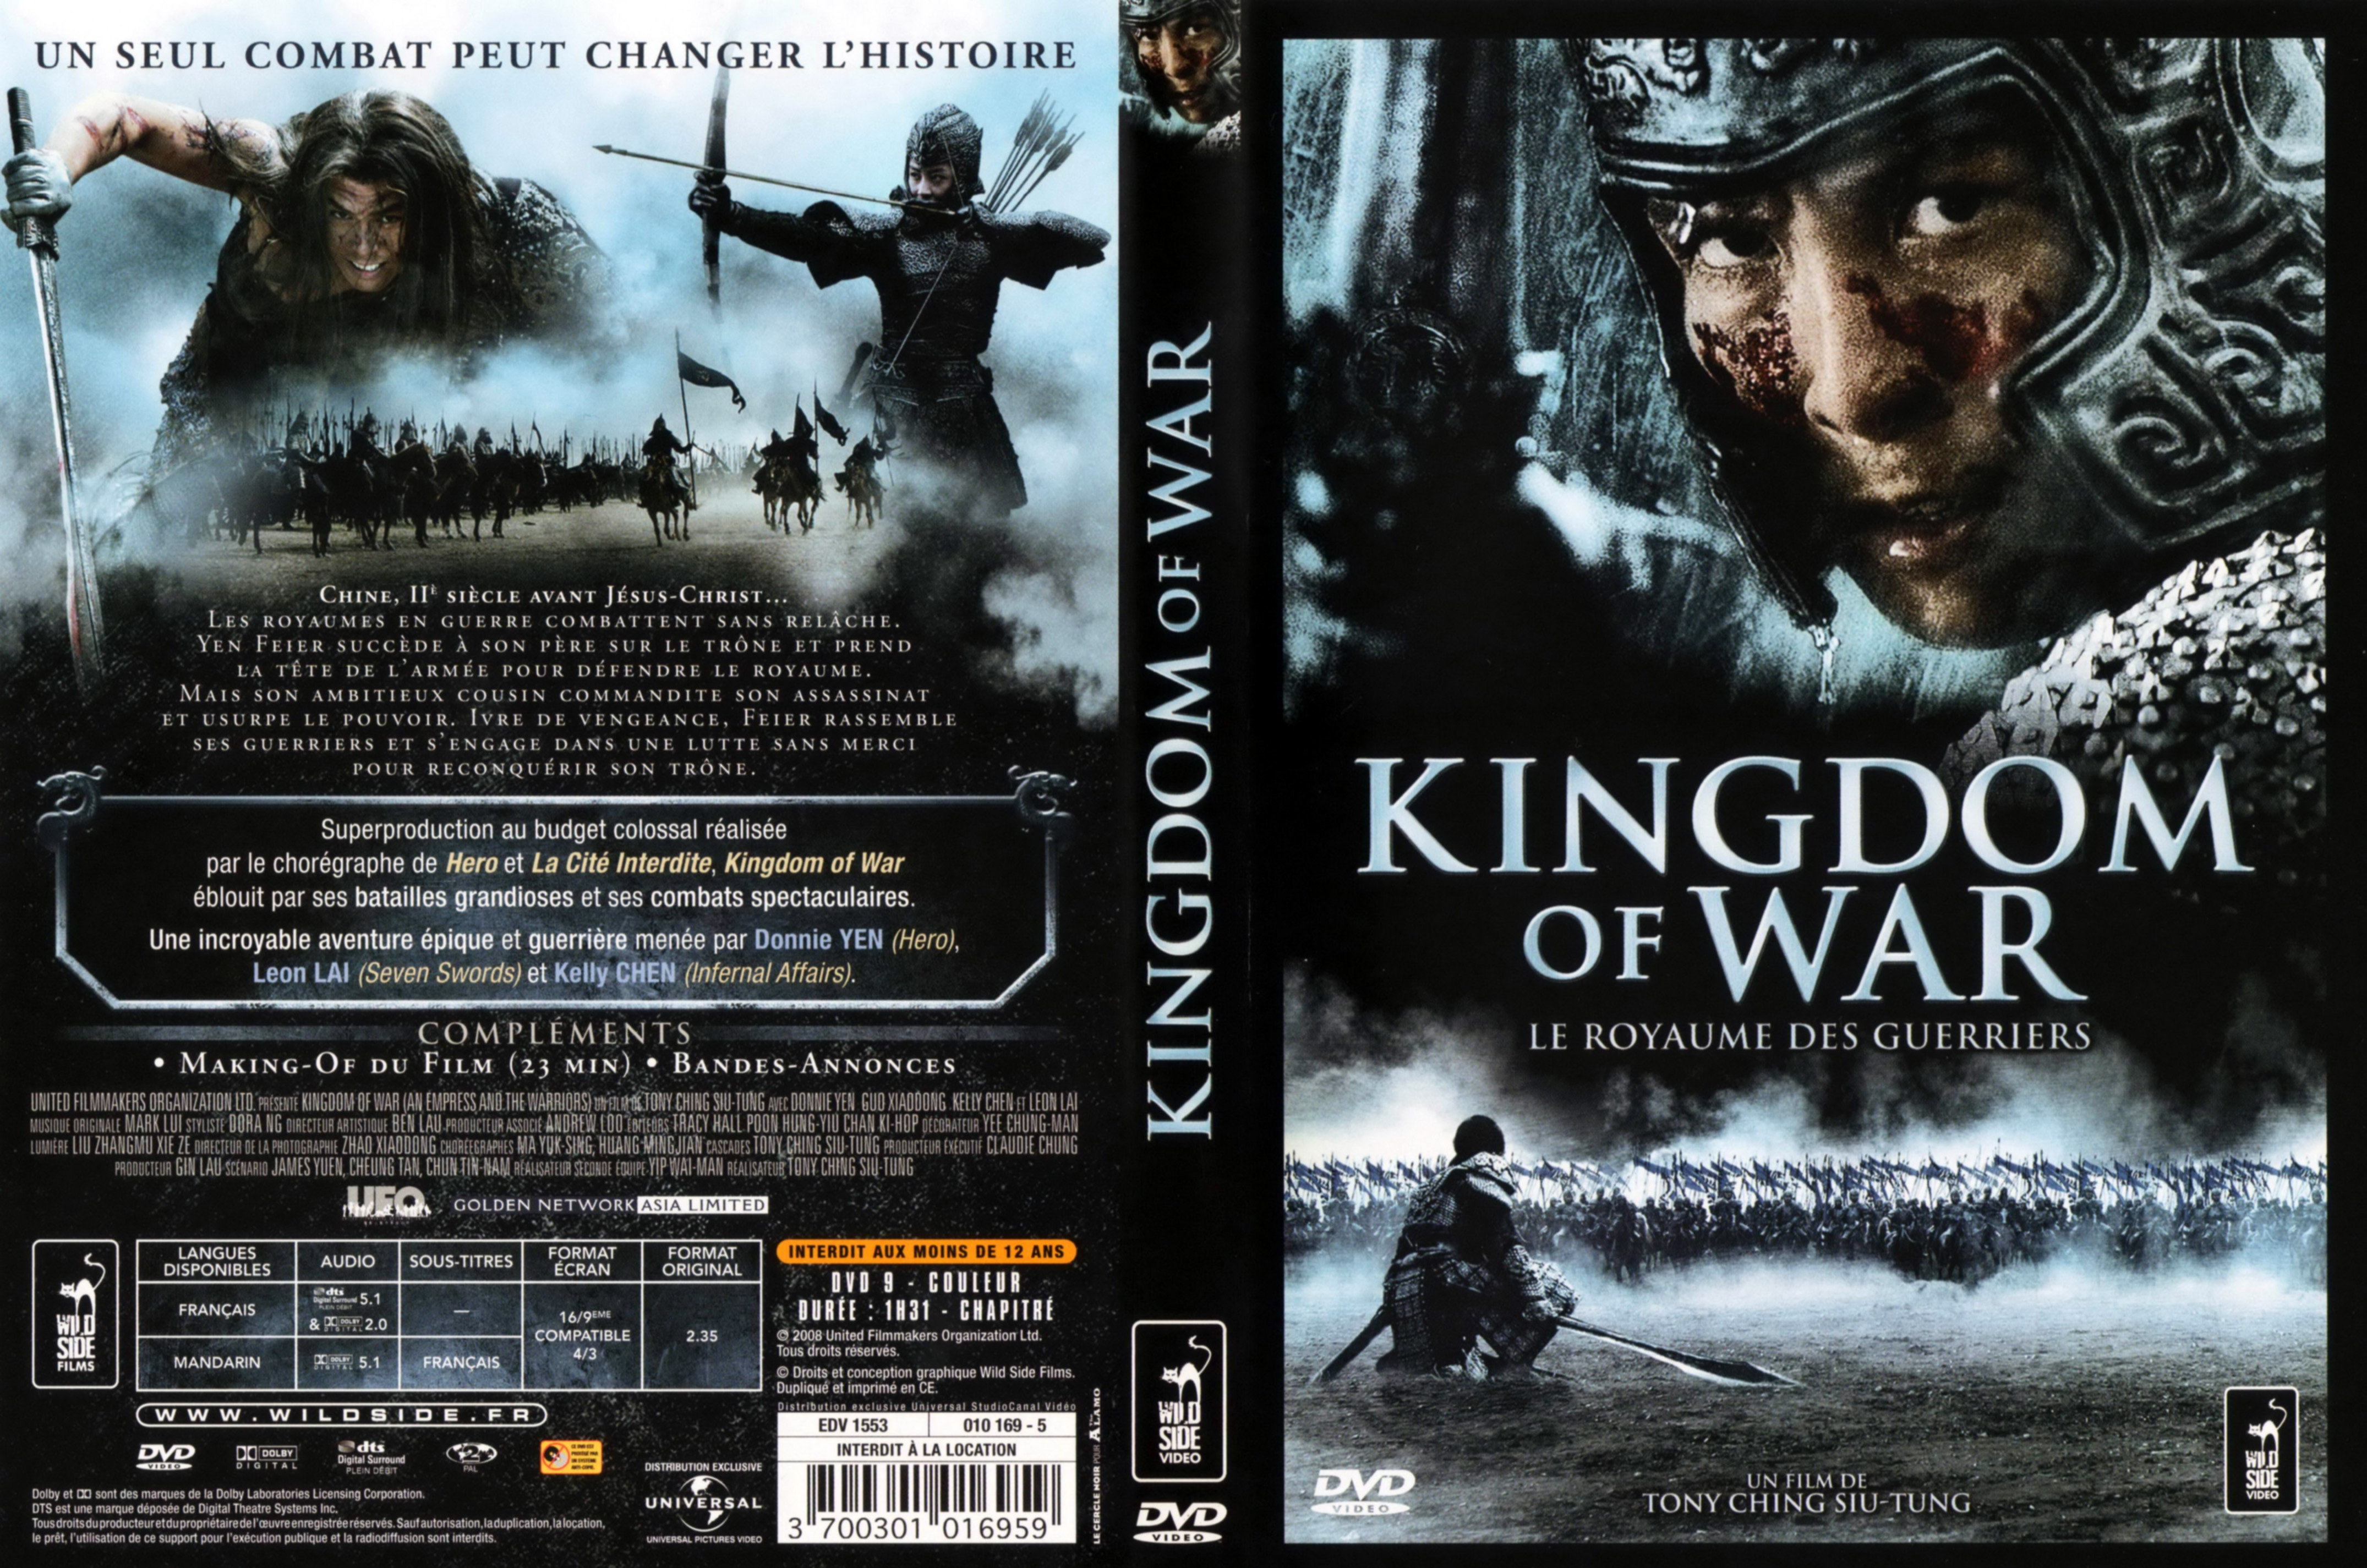 Jaquette DVD Kingdom of war